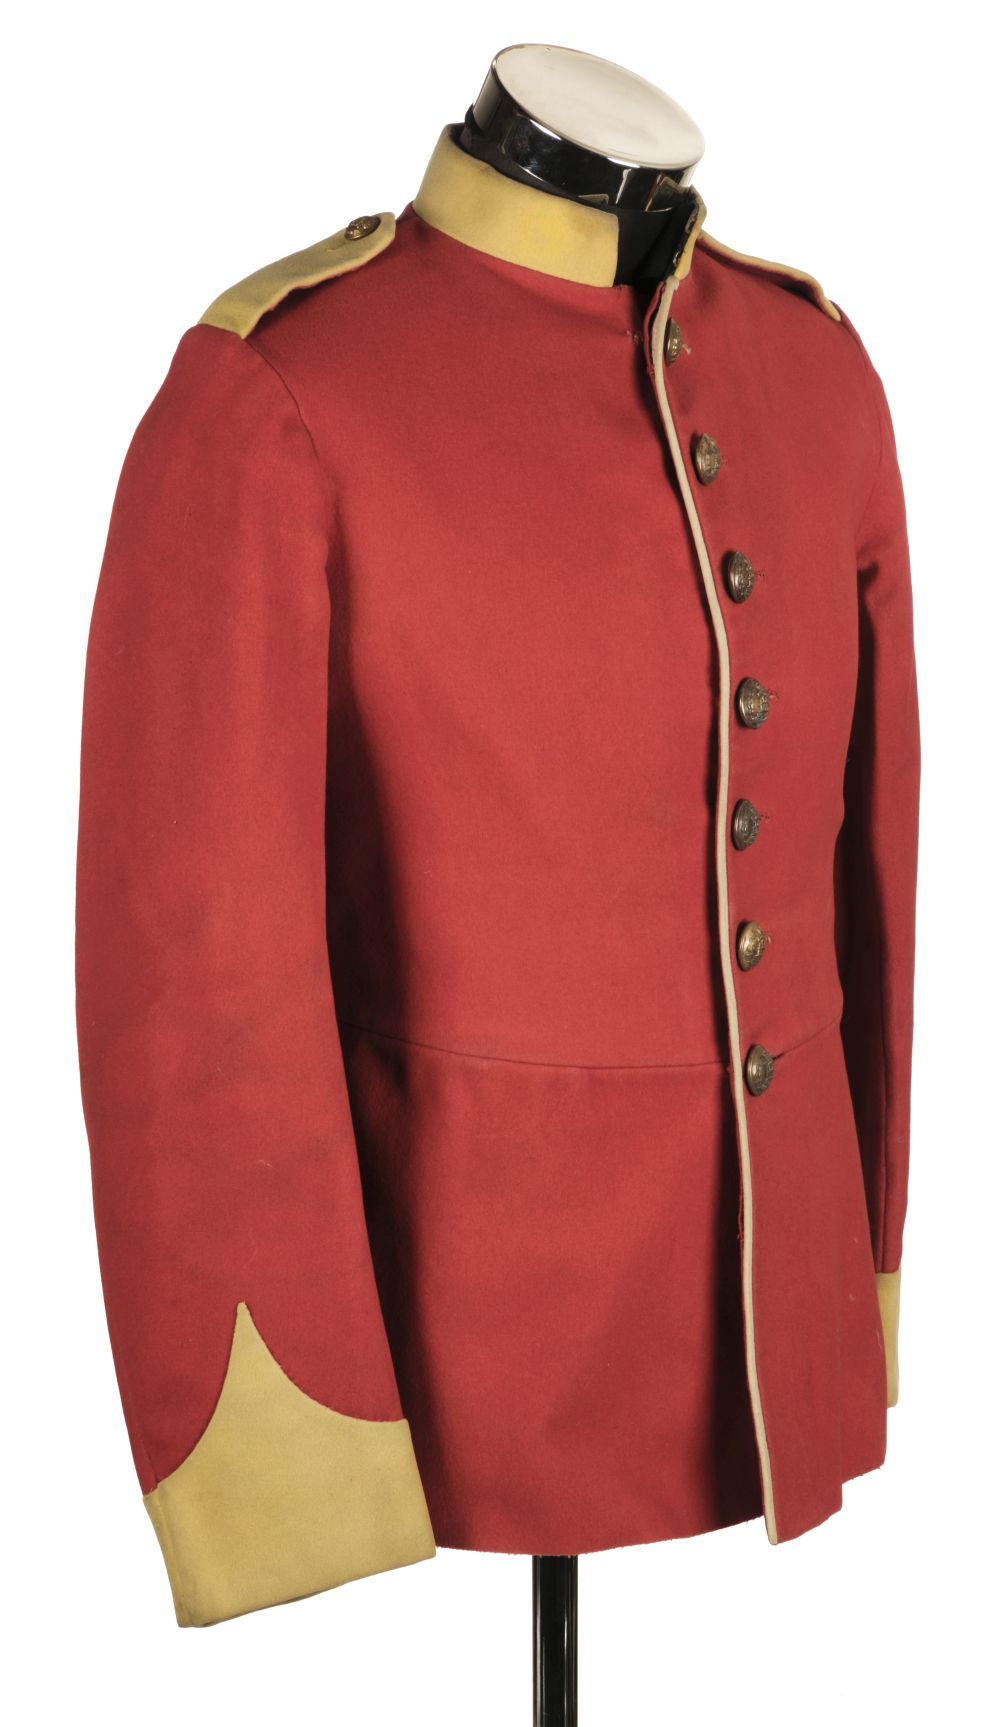 * Suffolk Regiment - Other Ranks Tunic